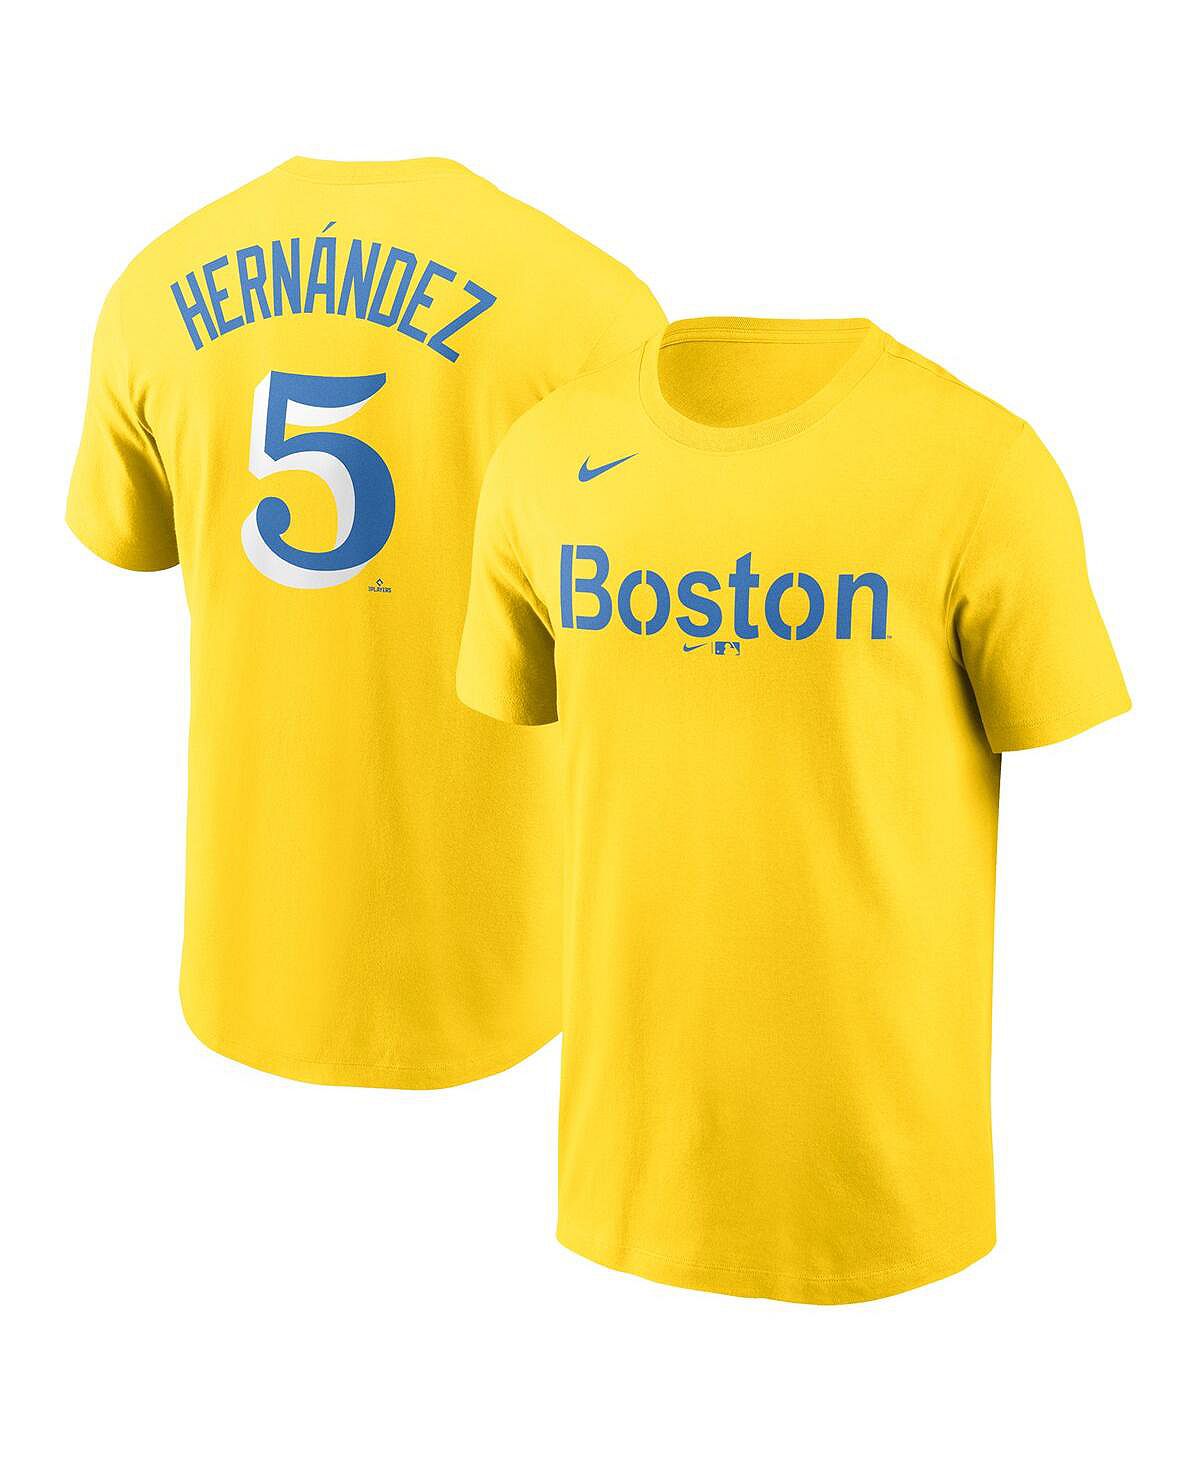 Мужская футболка enrique hernandez gold и blue boston red sox 2021 city connect с именем и номером Nike, мульти мужская черная футболка randy johnson arizona diamondbacks city connect с именем и номером nike